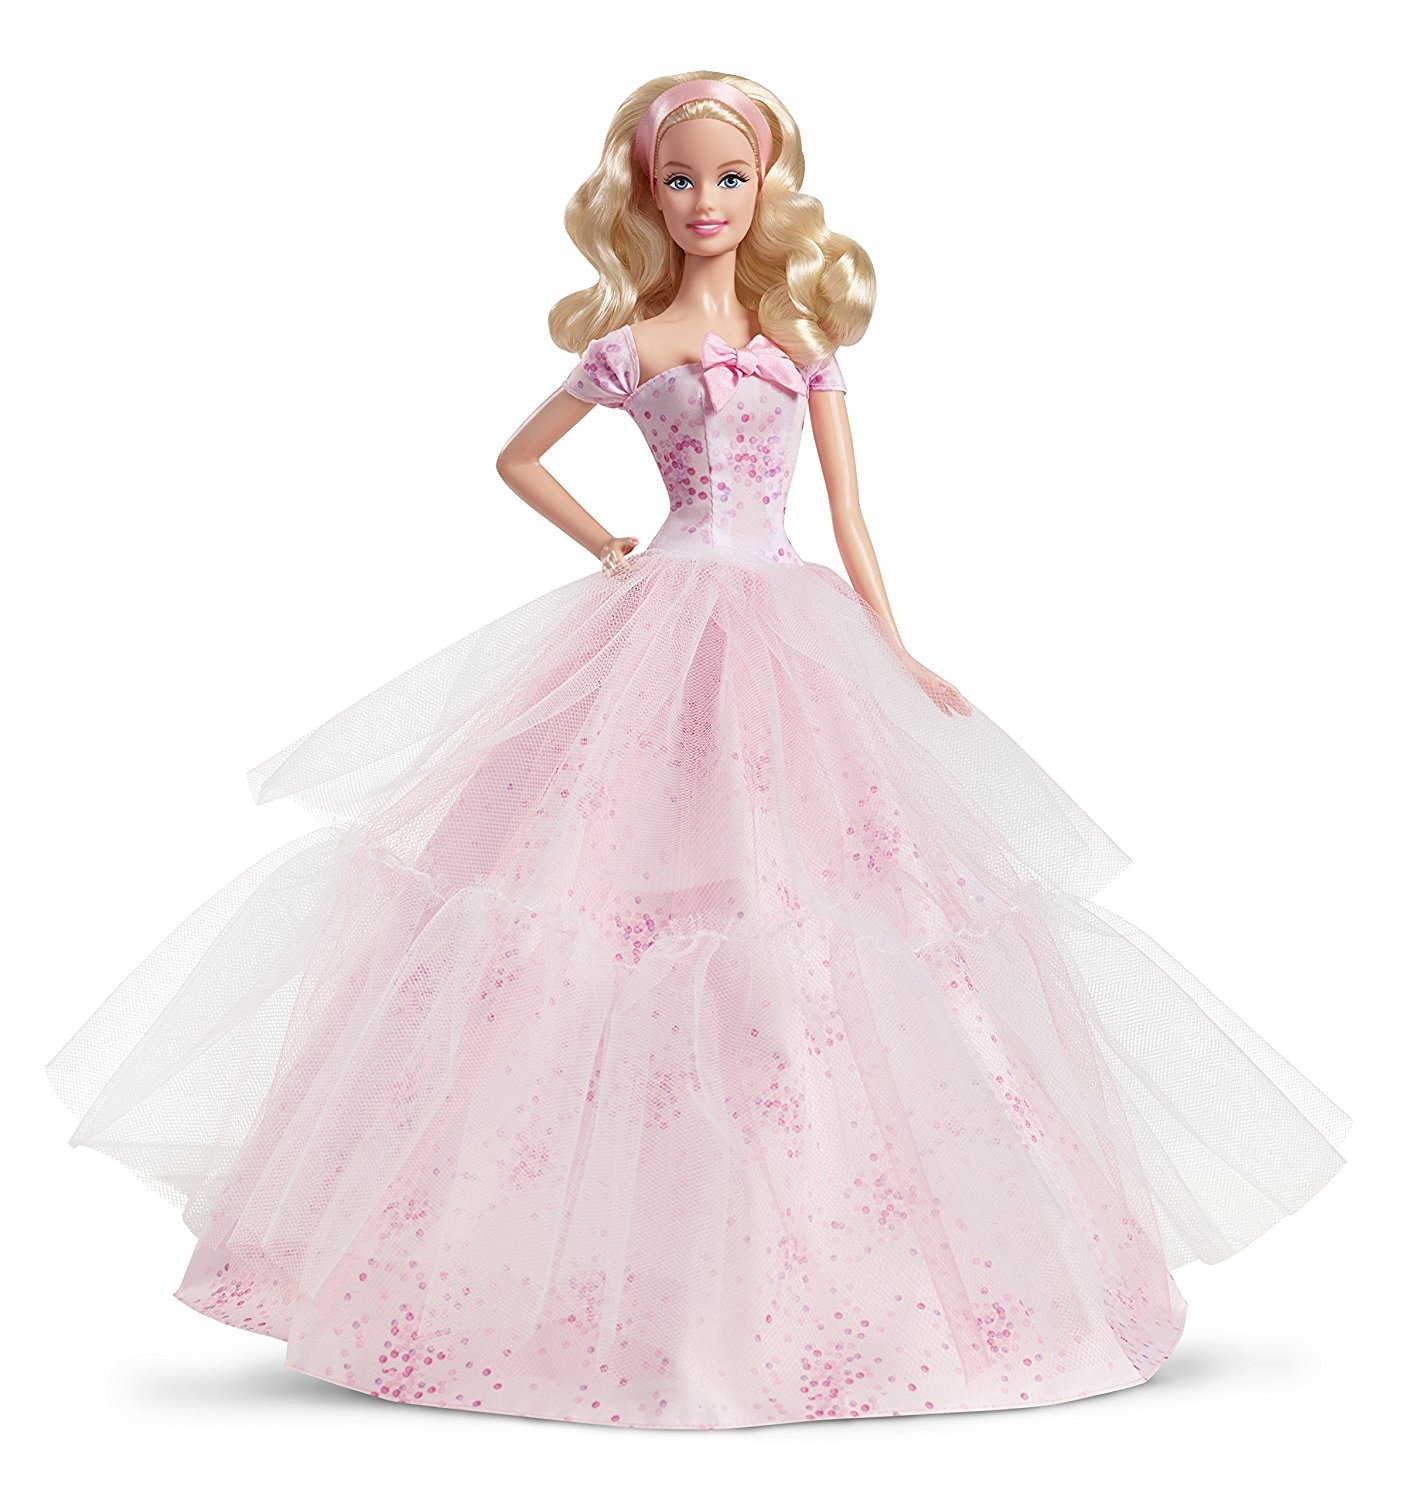 Amazon.com: Barbie Birthday Wishes 2016 Barbie Doll Blonde: Toys & Games